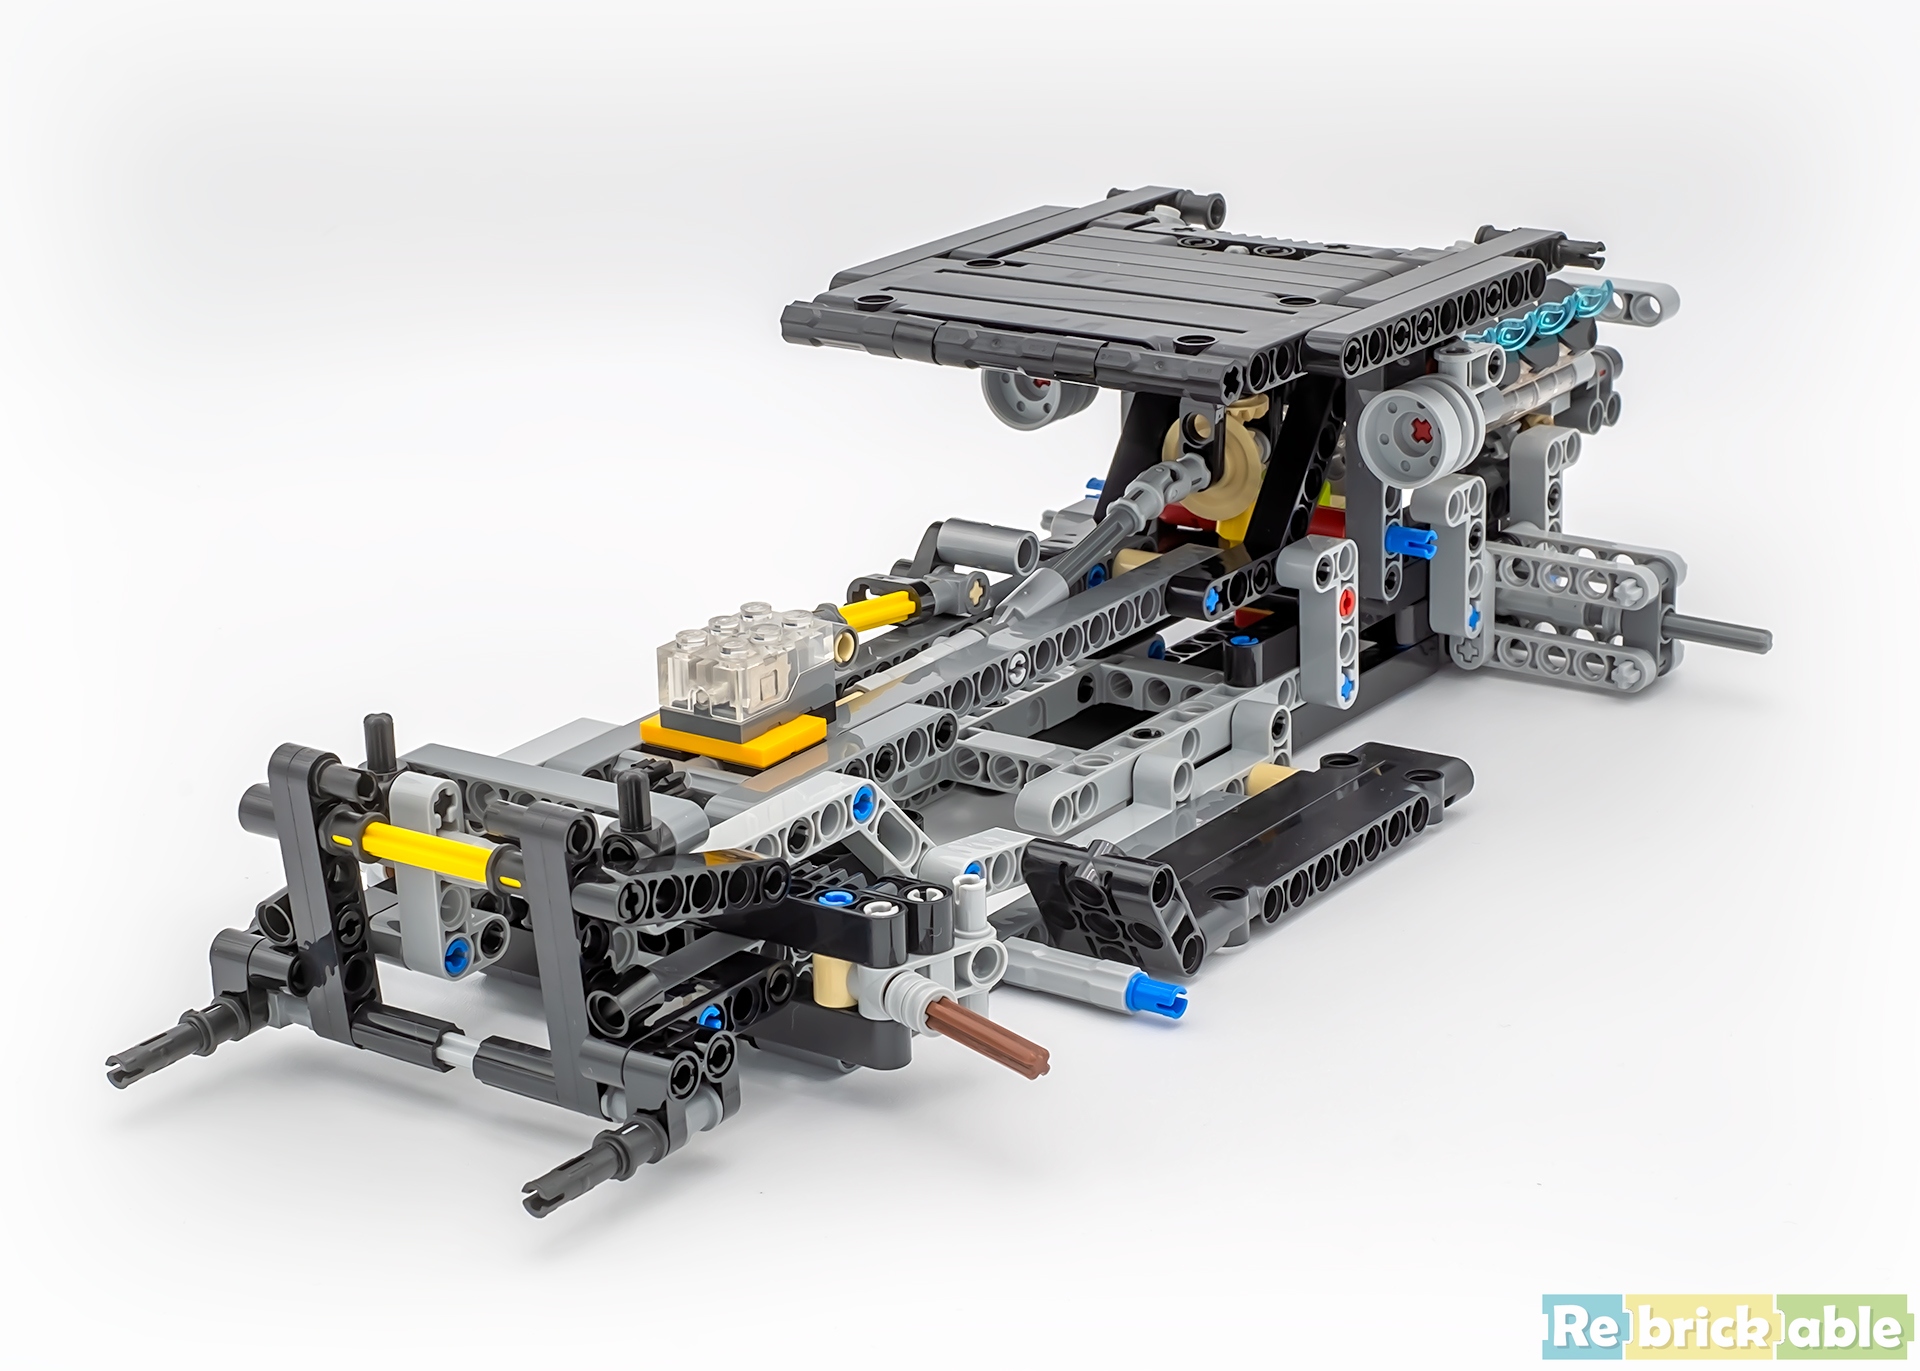 REVIEW] 42127 - The Batman - Batmobile - LEGO Technic, Mindstorms, Model  Team and Scale Modeling - Eurobricks Forums